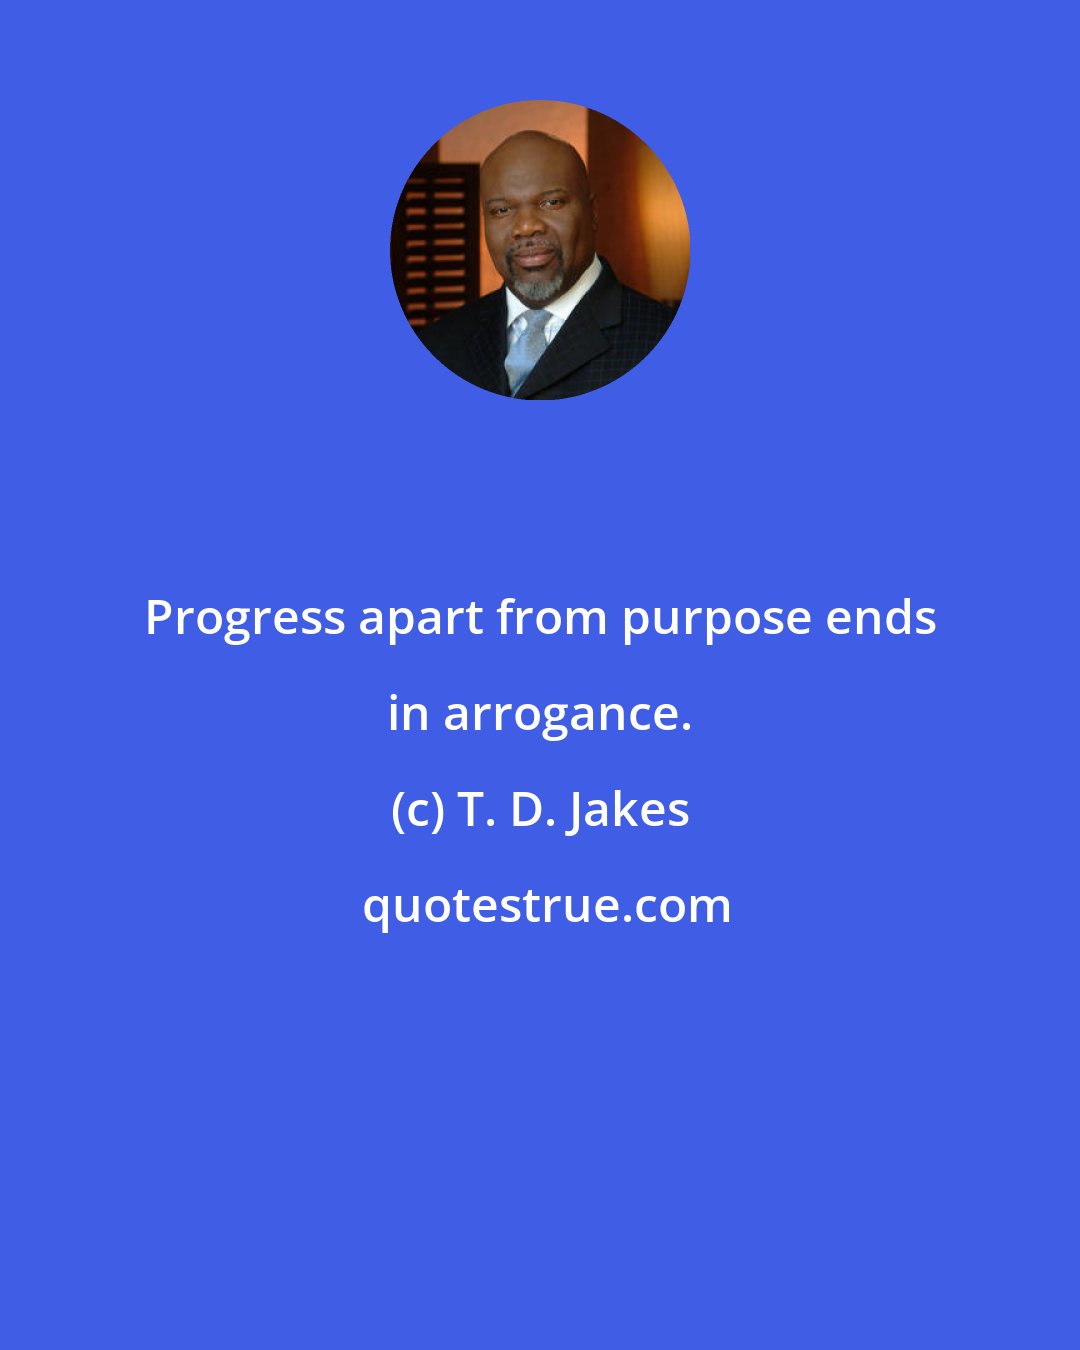 T. D. Jakes: Progress apart from purpose ends in arrogance.